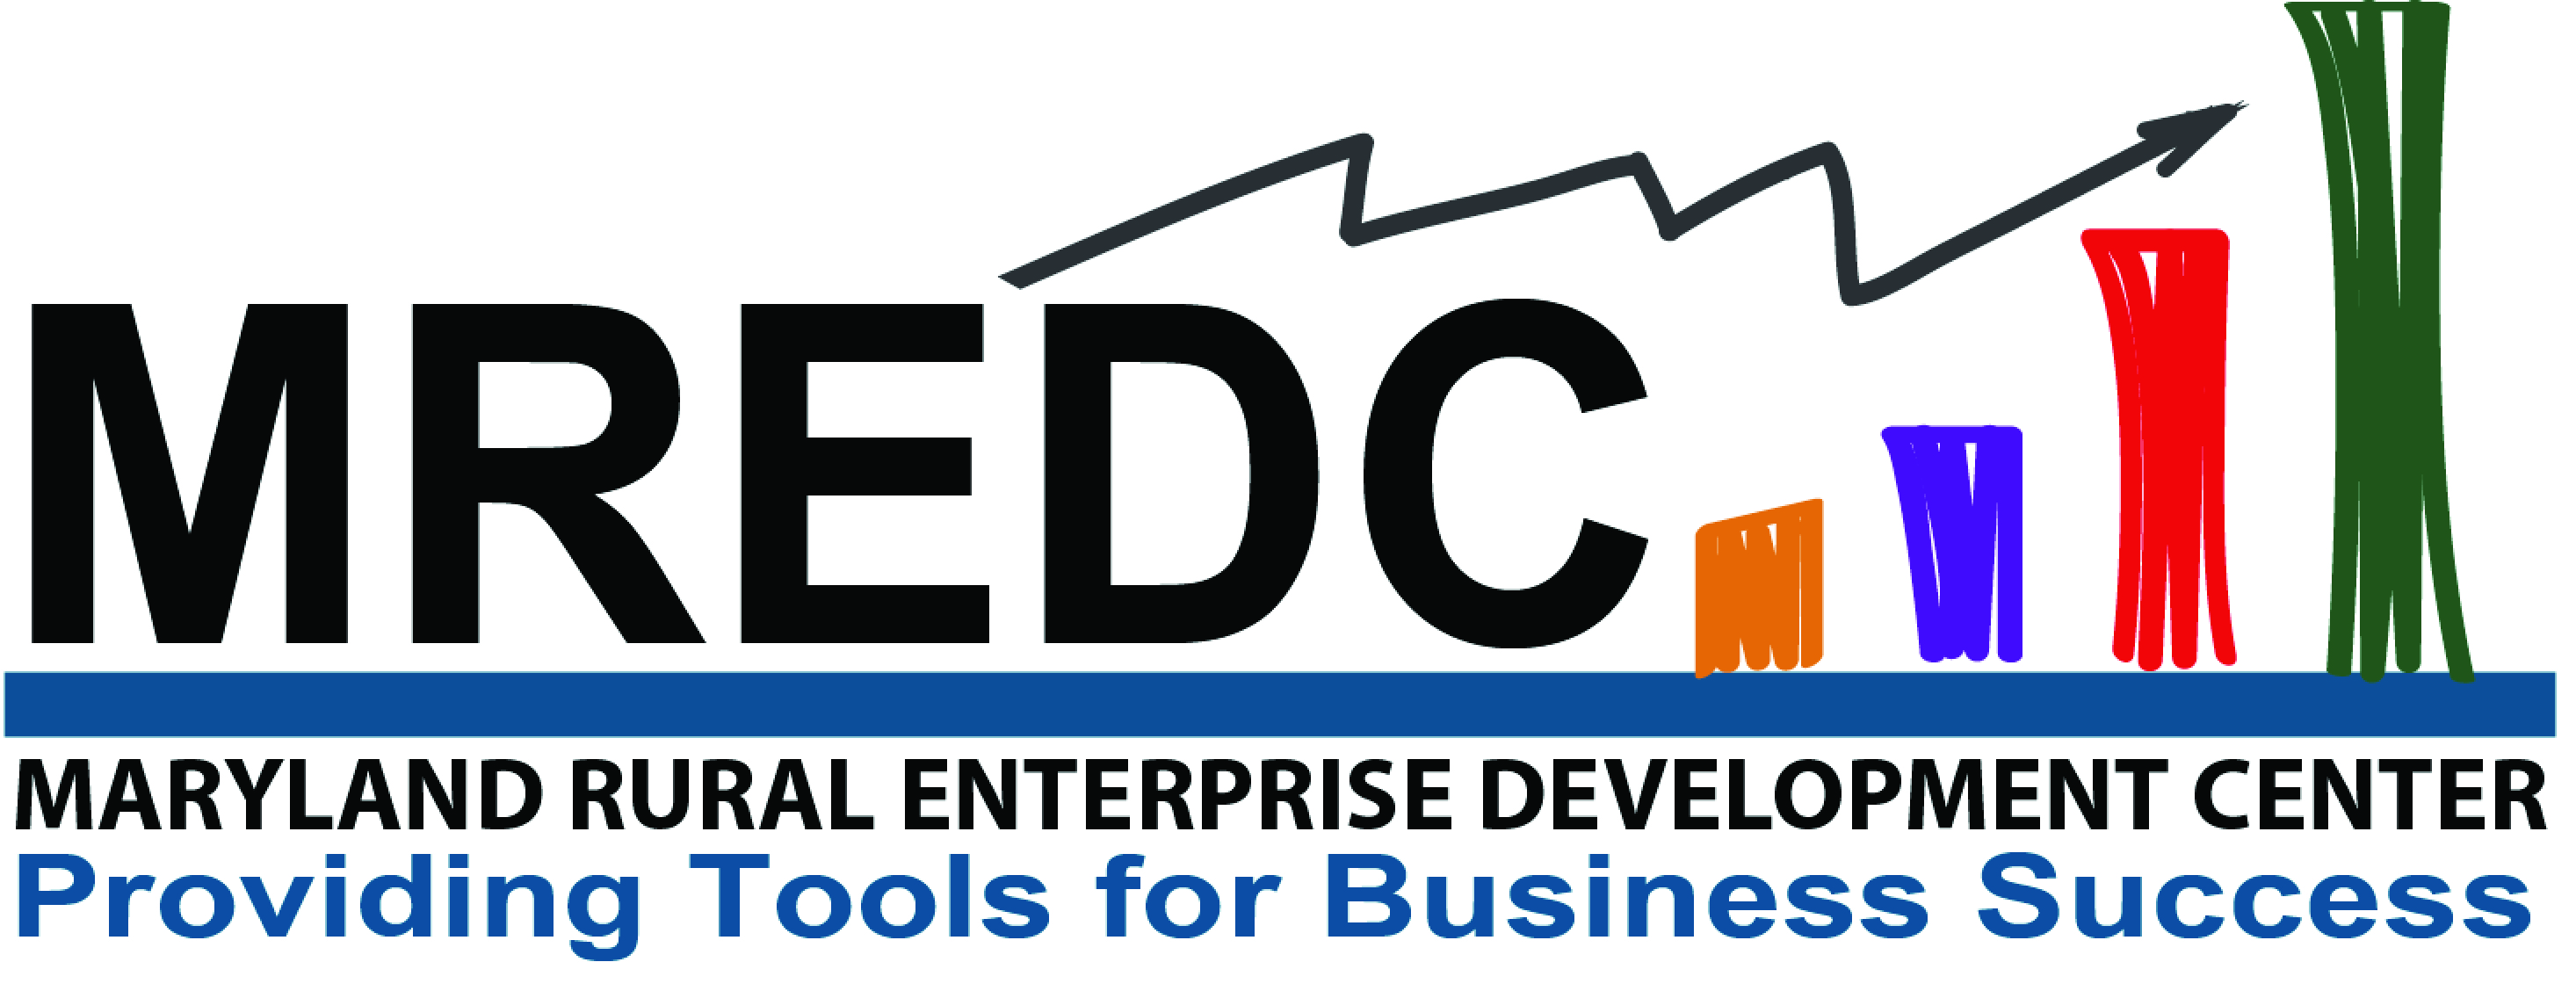 Maryland Rural Enterprise Development Center Logo